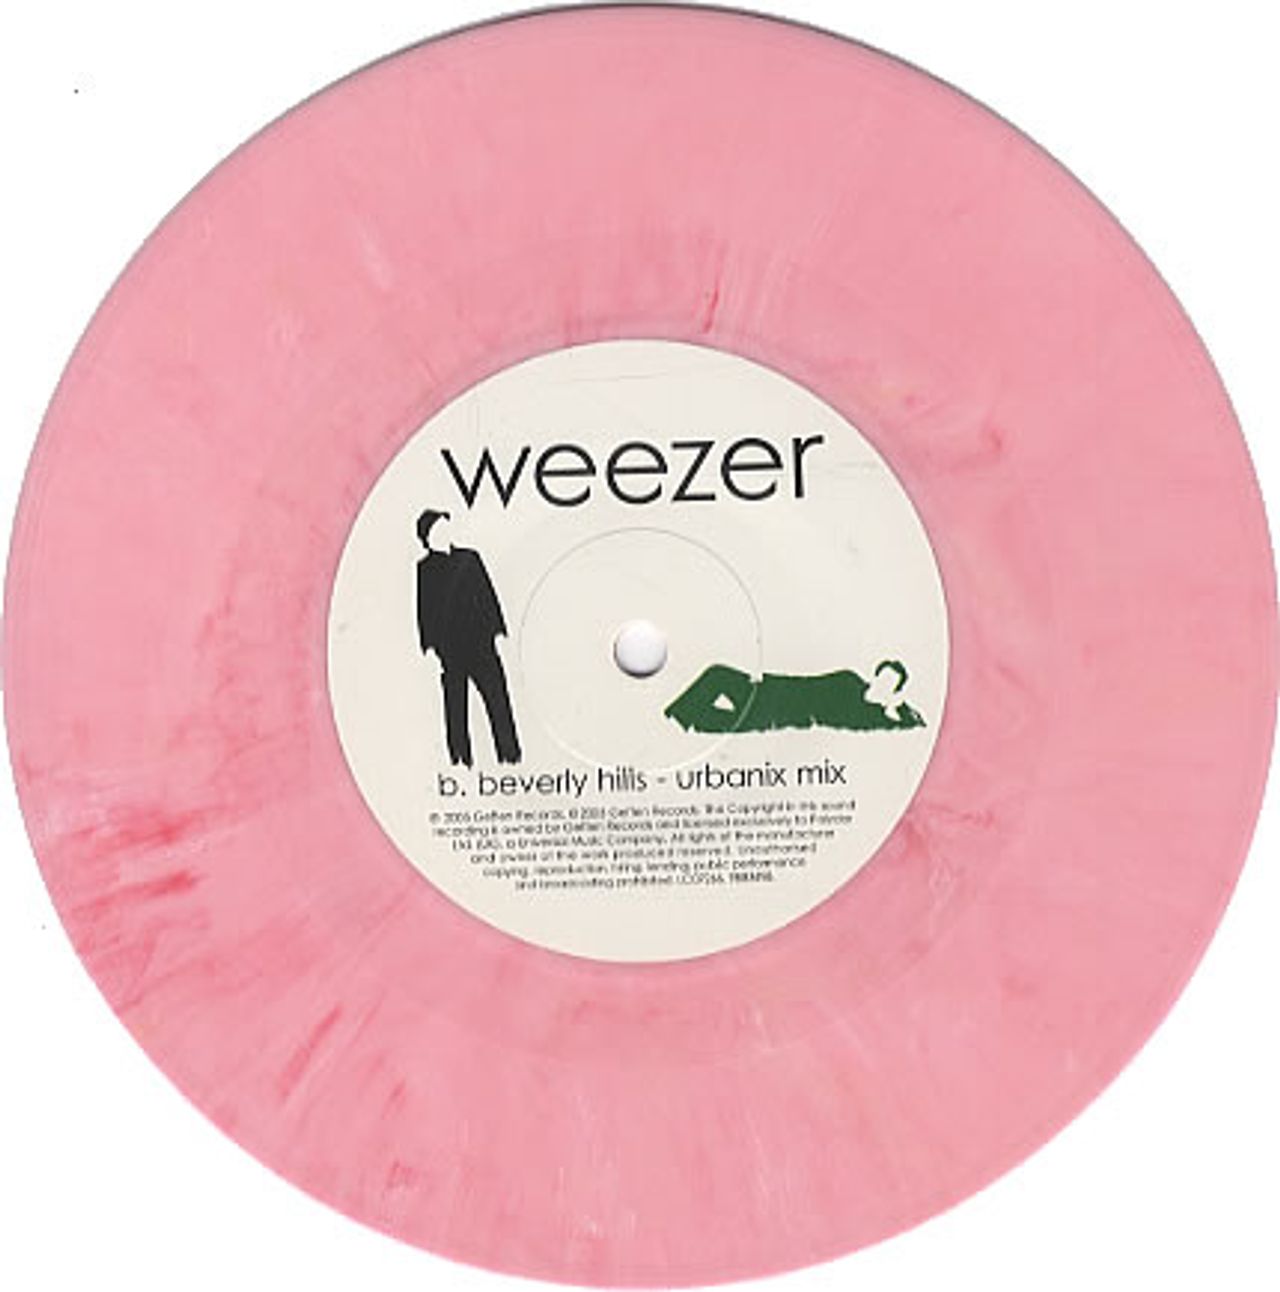 Weezer We Are All On Drugs - Pink Vinyl UK 7 vinyl — RareVinyl.com